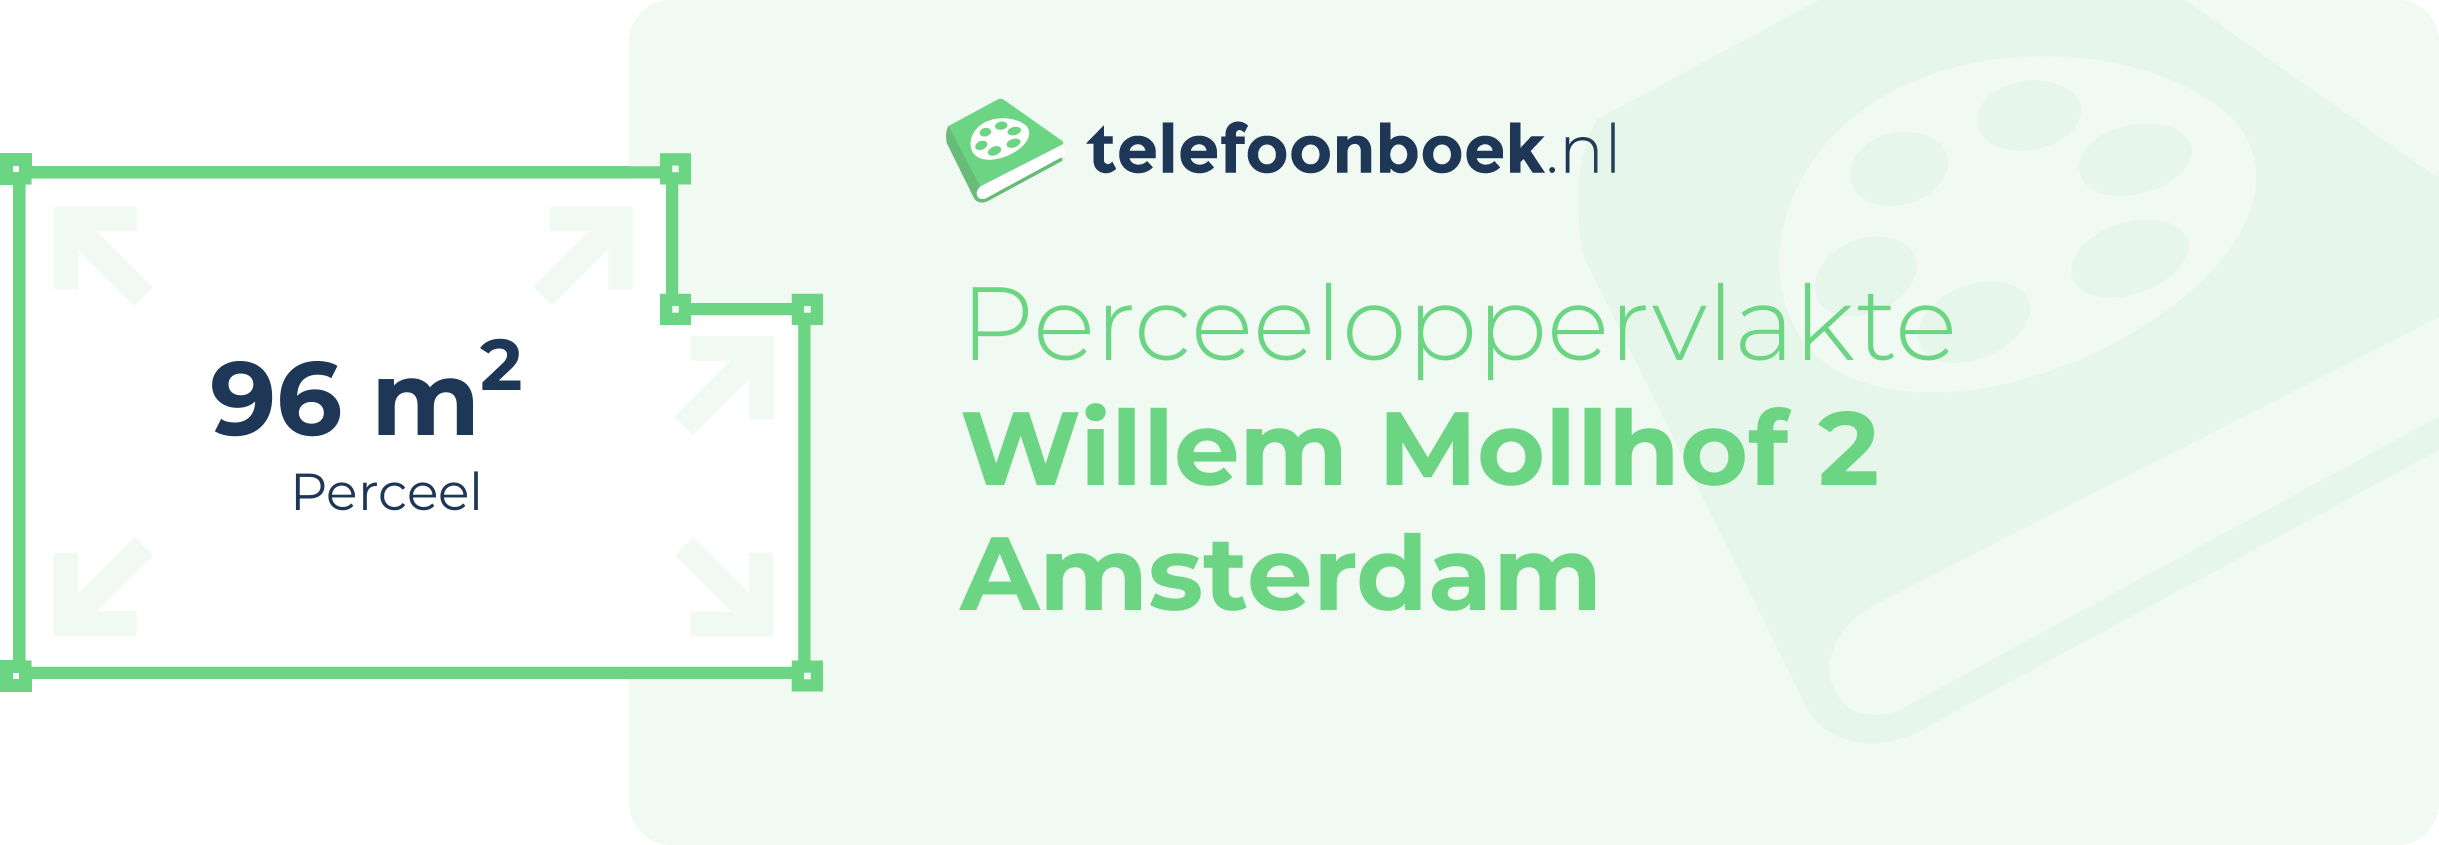 Perceeloppervlakte Willem Mollhof 2 Amsterdam